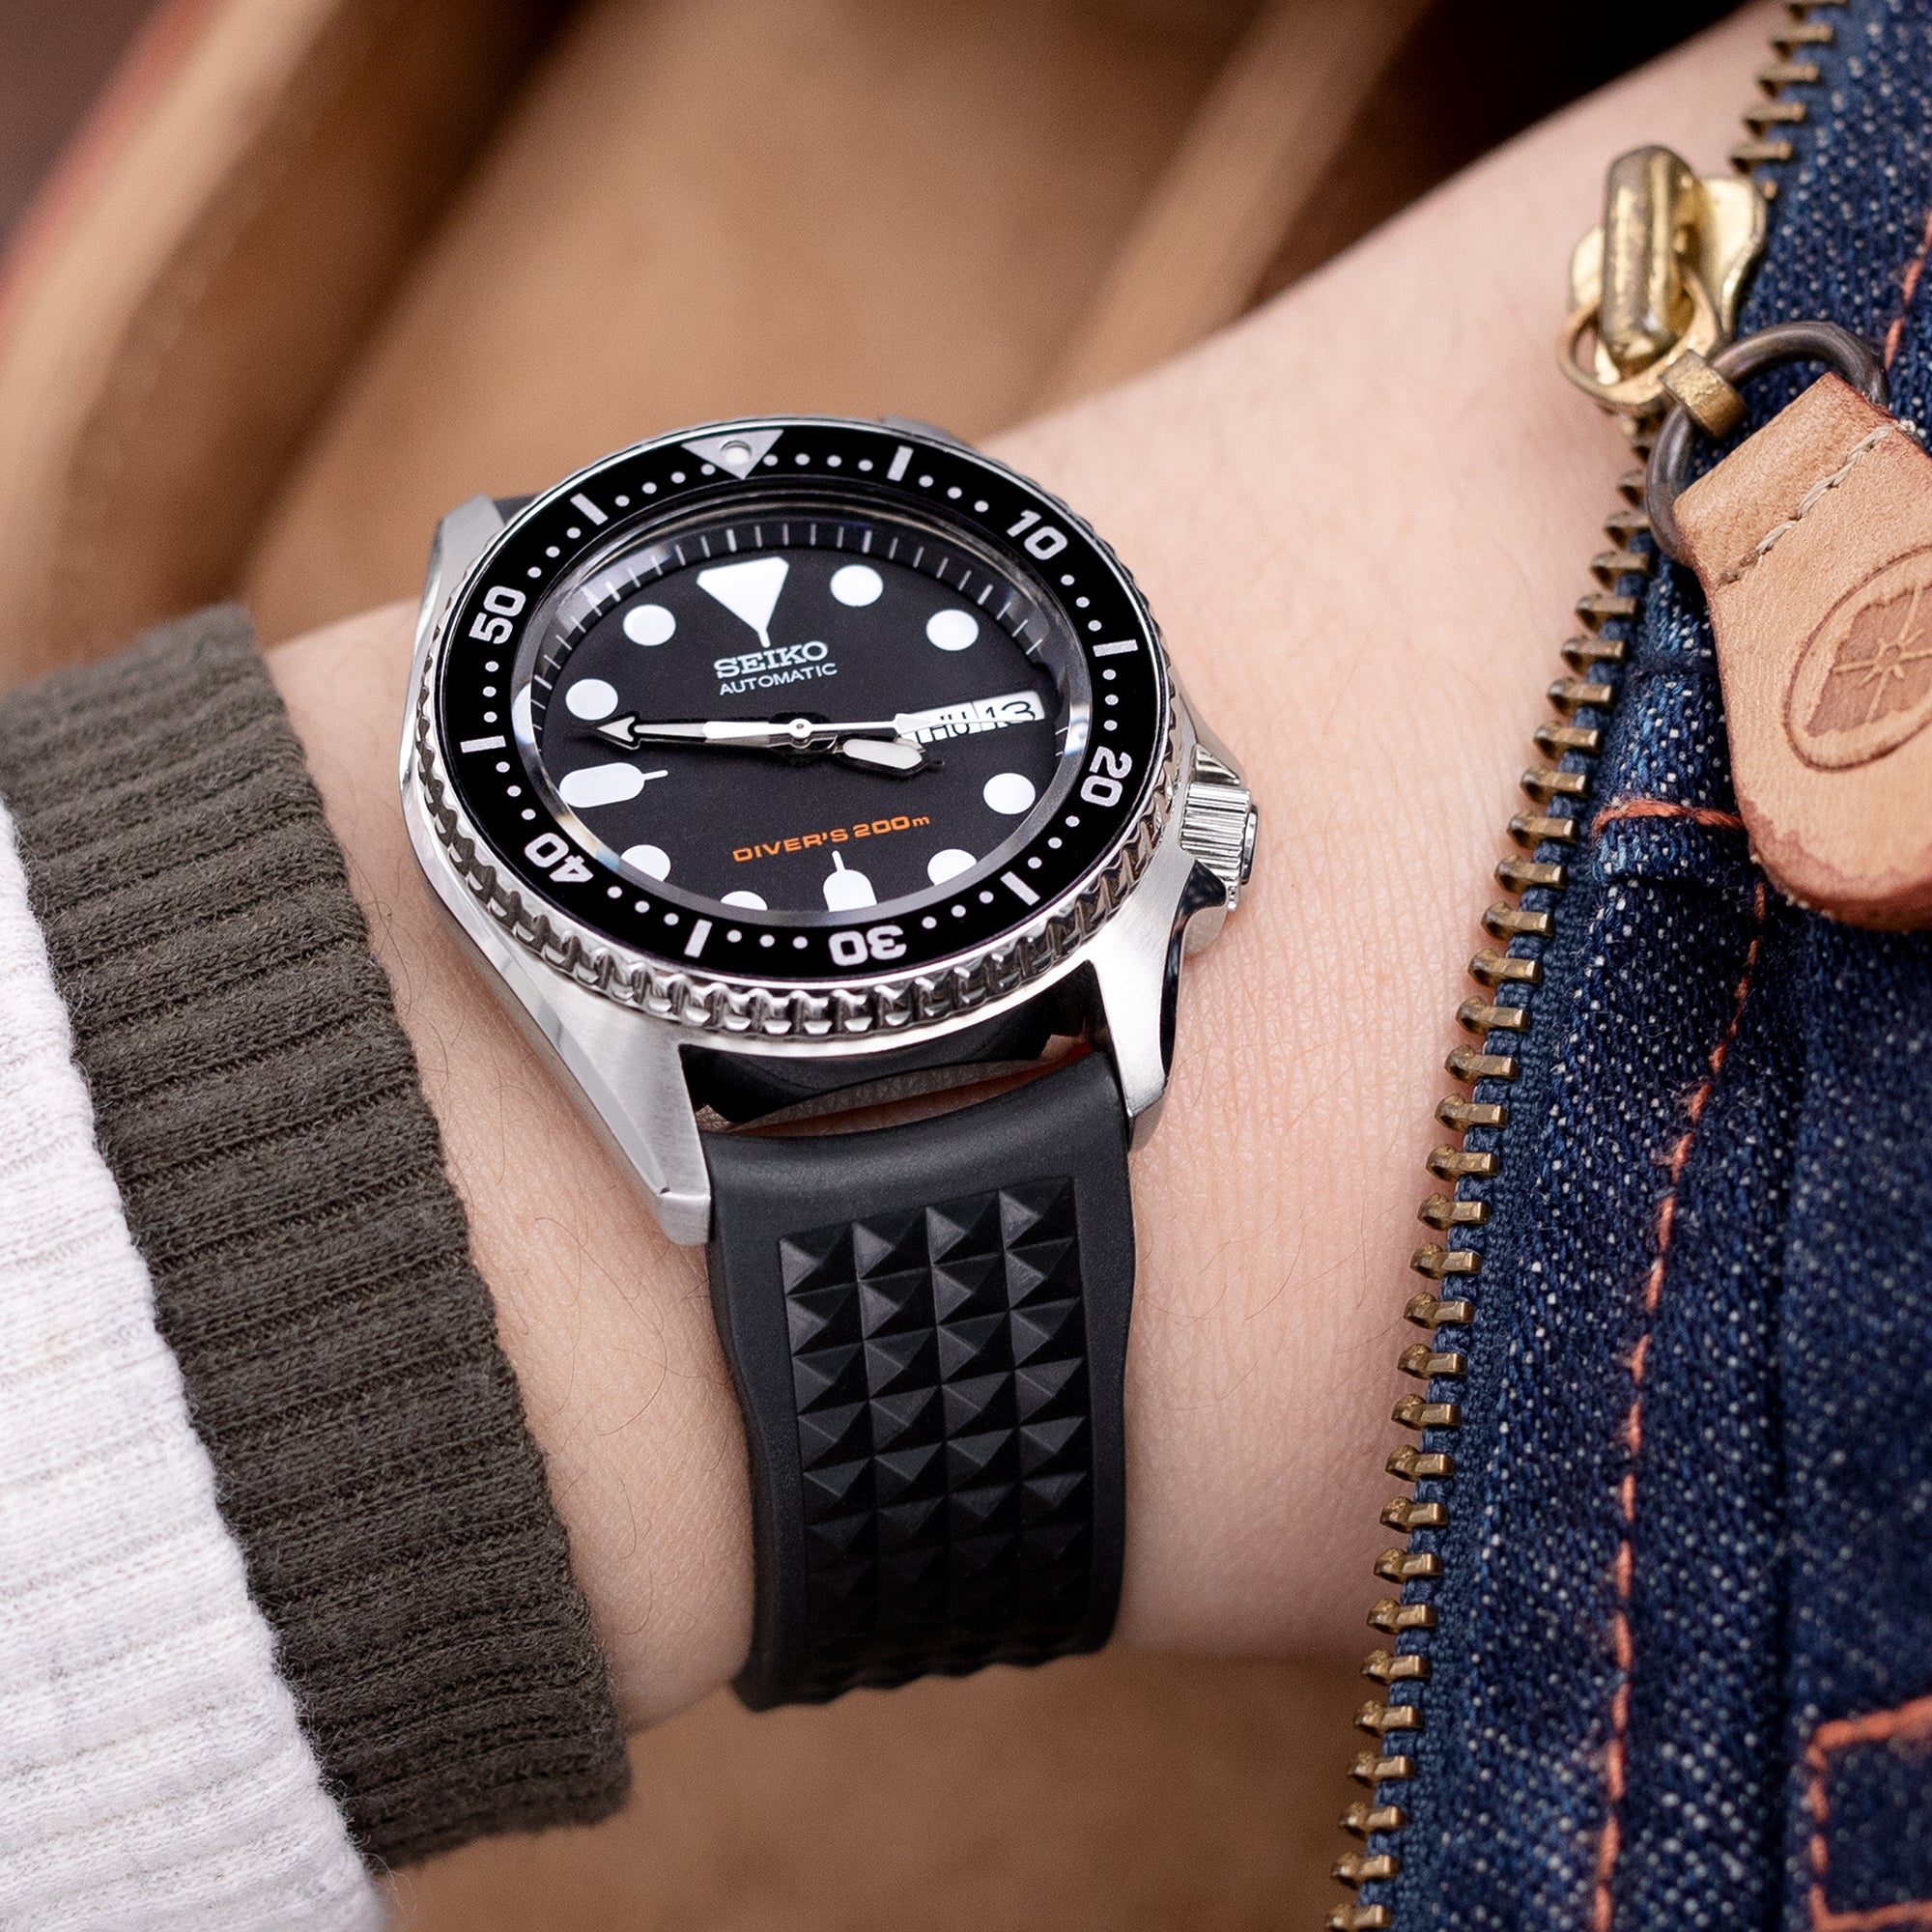 Seiko SKX013 Midsize Diver 200m Automatic Watch, Seiko Prospex Marinemaster MM300 Diver Automatic SBDX017 Strapcode Watch Bands